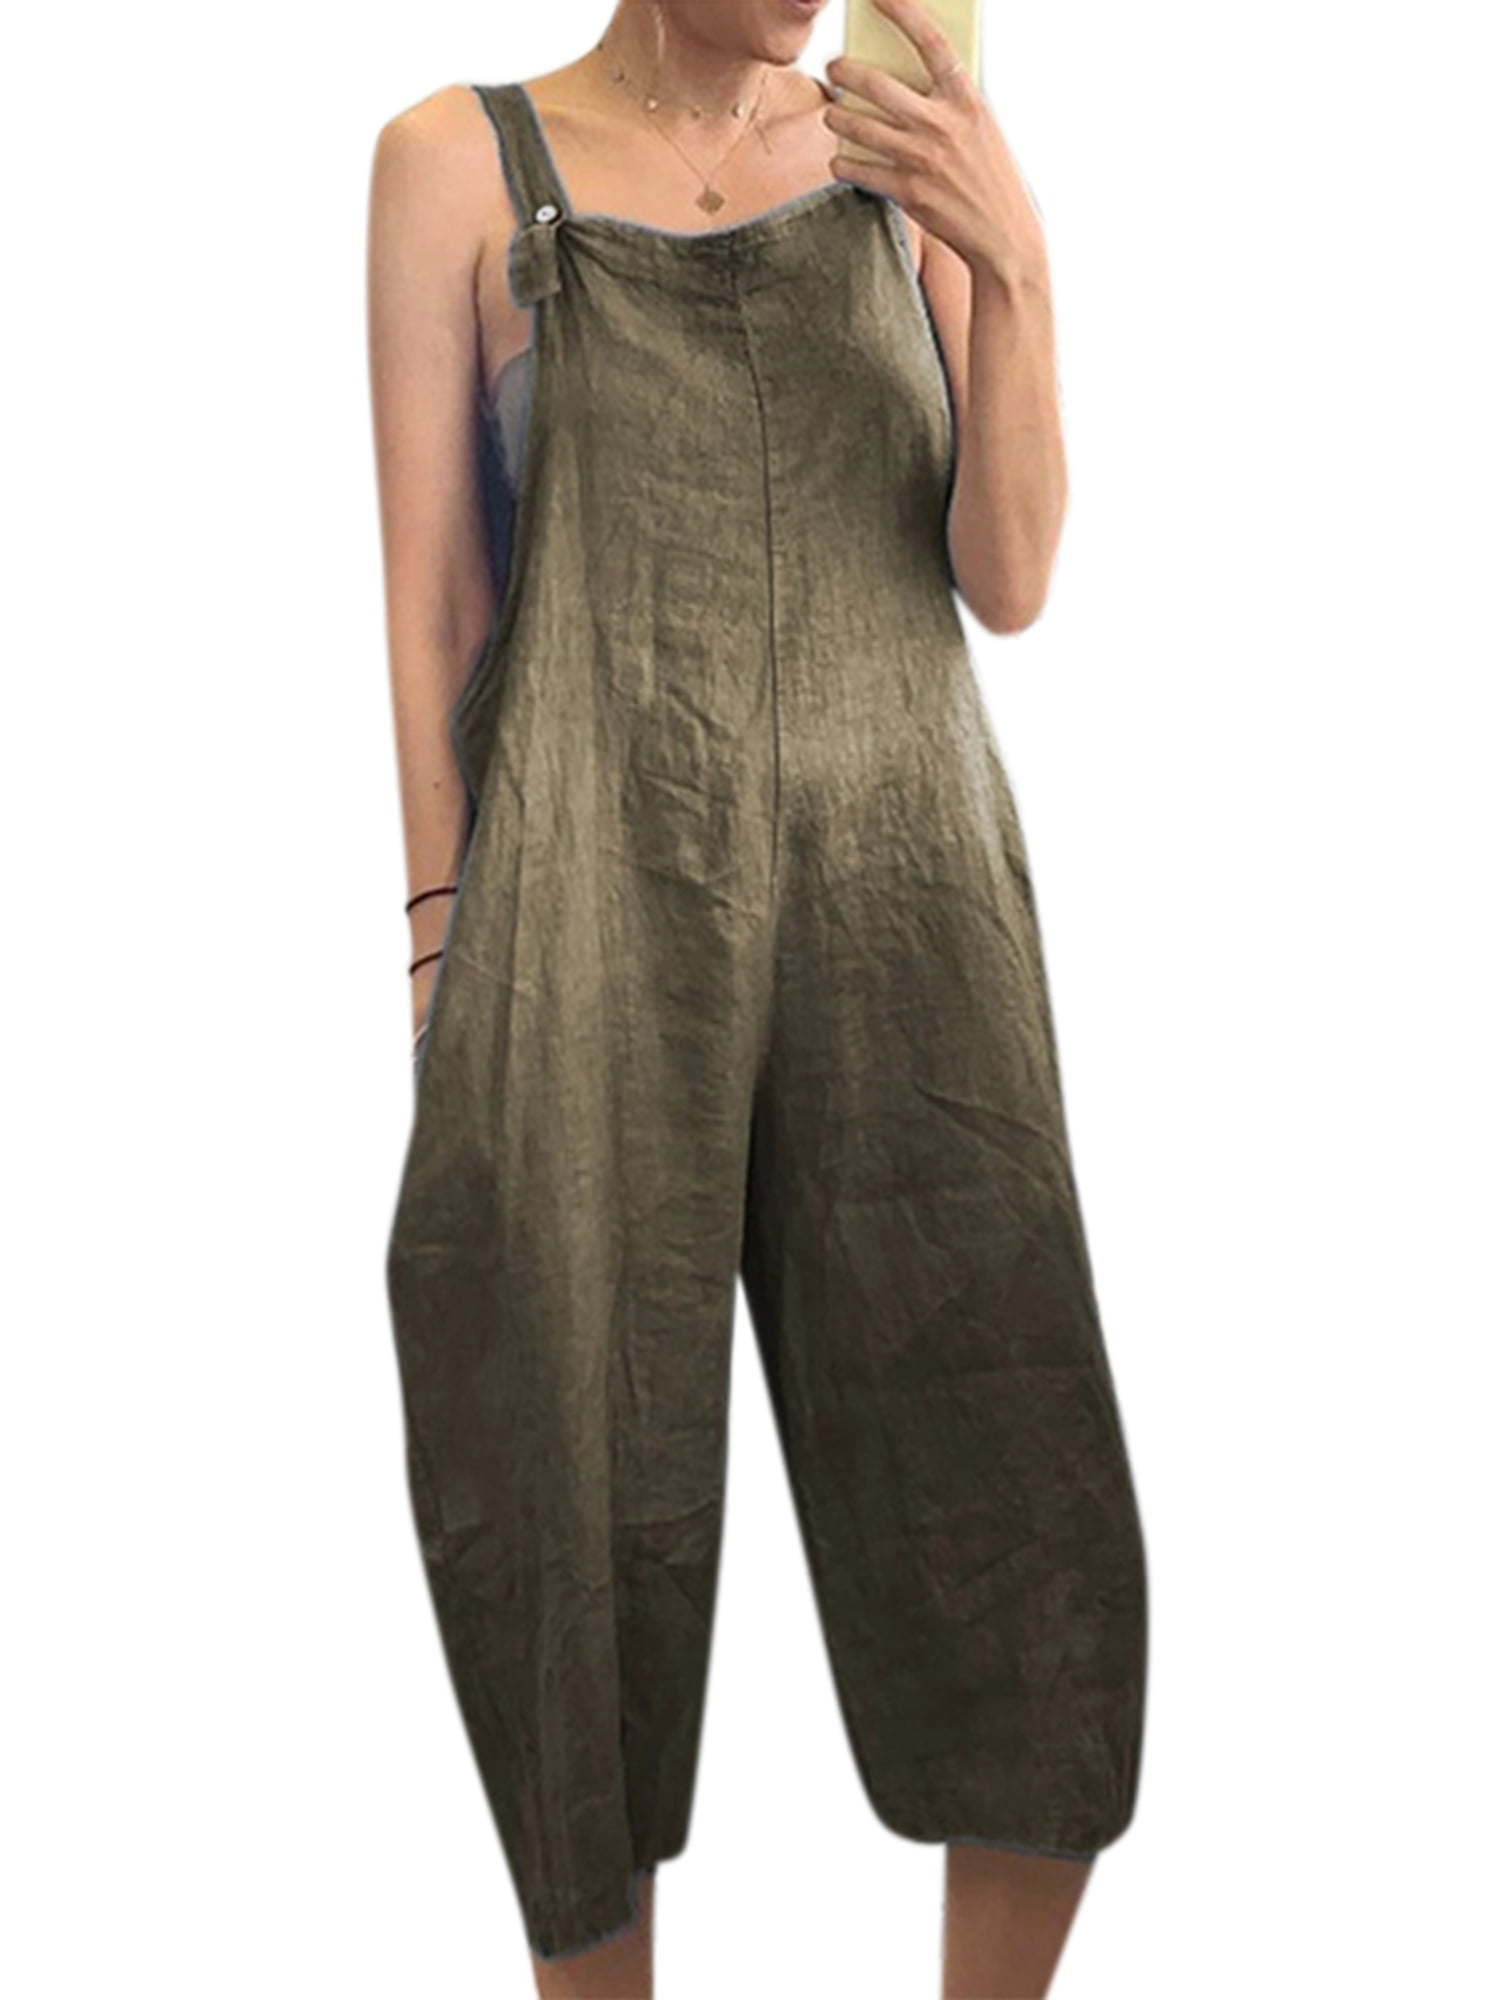 Plus Size Women Jumpsuit Casual Baggy Wide Leg Bib Overalls Romper Summer Button Up Suspender Playsuit Pants with Pocket